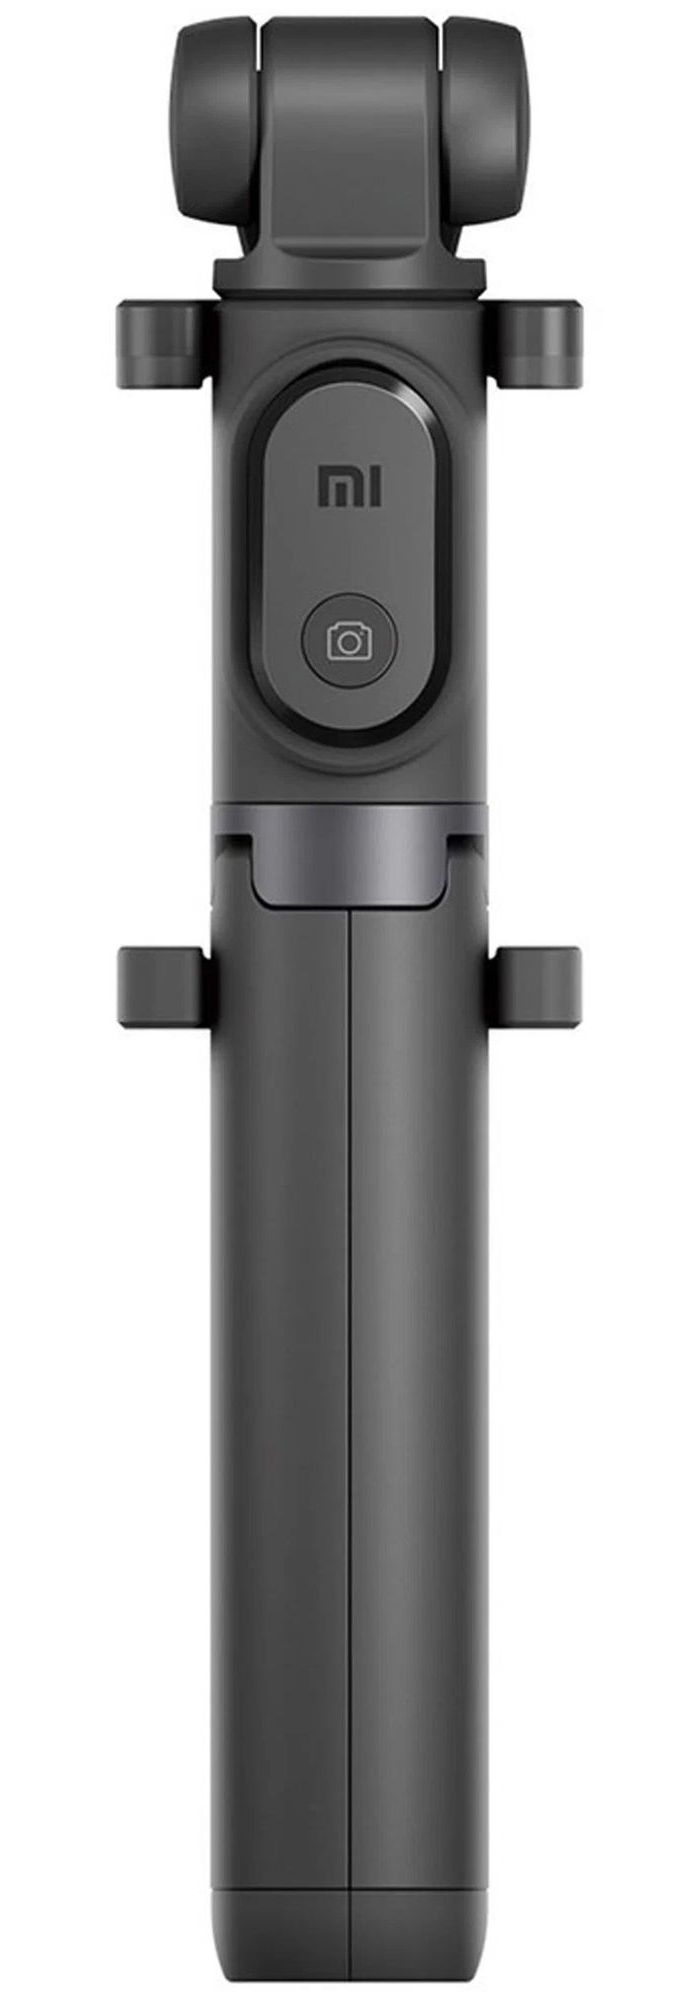 Монопод Xiaomi Mi Selfie Stick Tripod Black (XMZPG01YM) монопод штатив mi selfie stick tripod black xmzpg01ym fba4070us